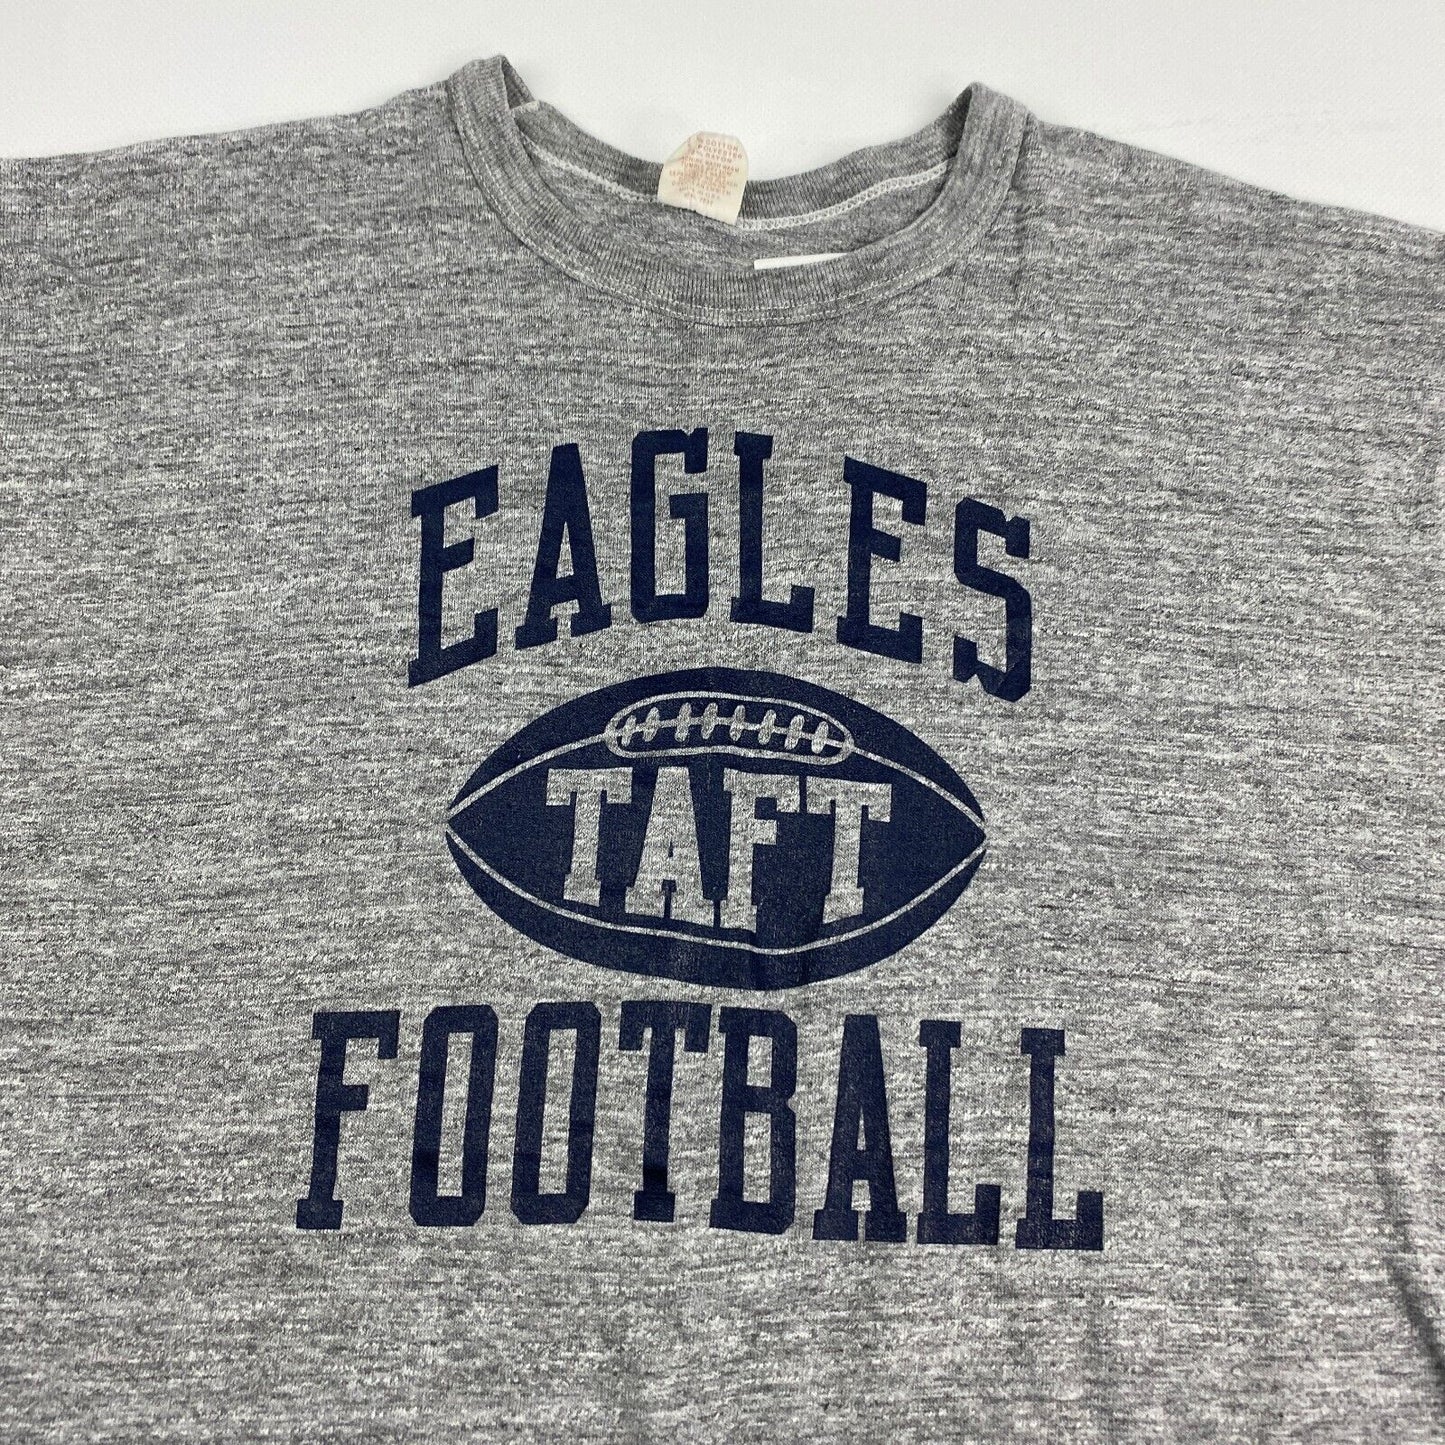 VINTAGE 70s Eagles Taft Football Russell Athletic T-Shirt sz Large Men